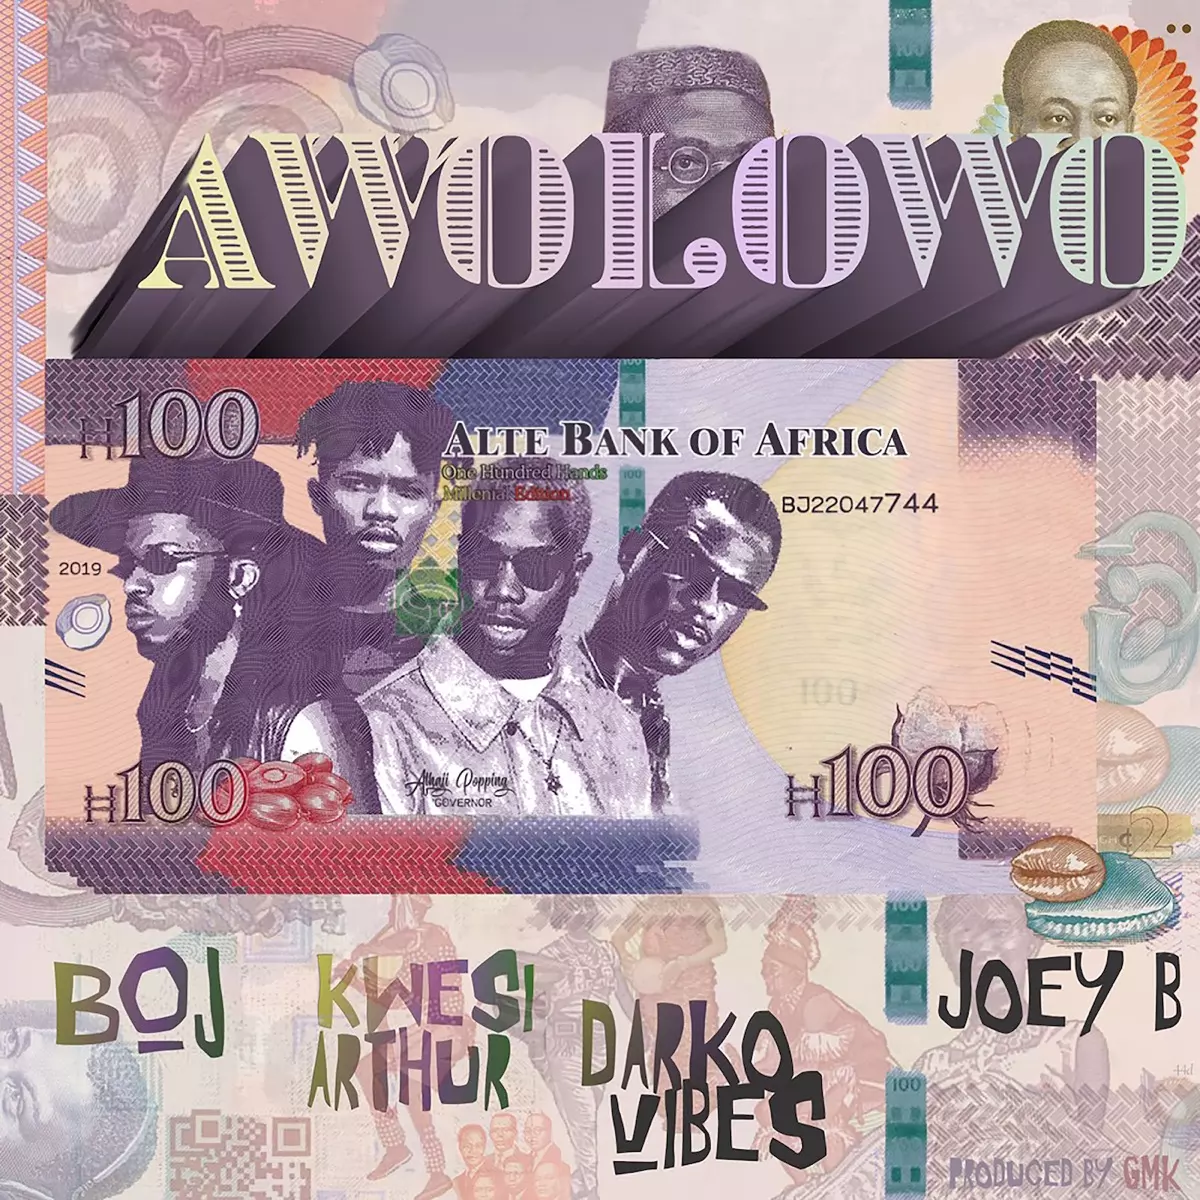 Awolowo (feat. Kwesi Arthur, Darko Vibes & Joey B) - Single by BOJ on Apple Music